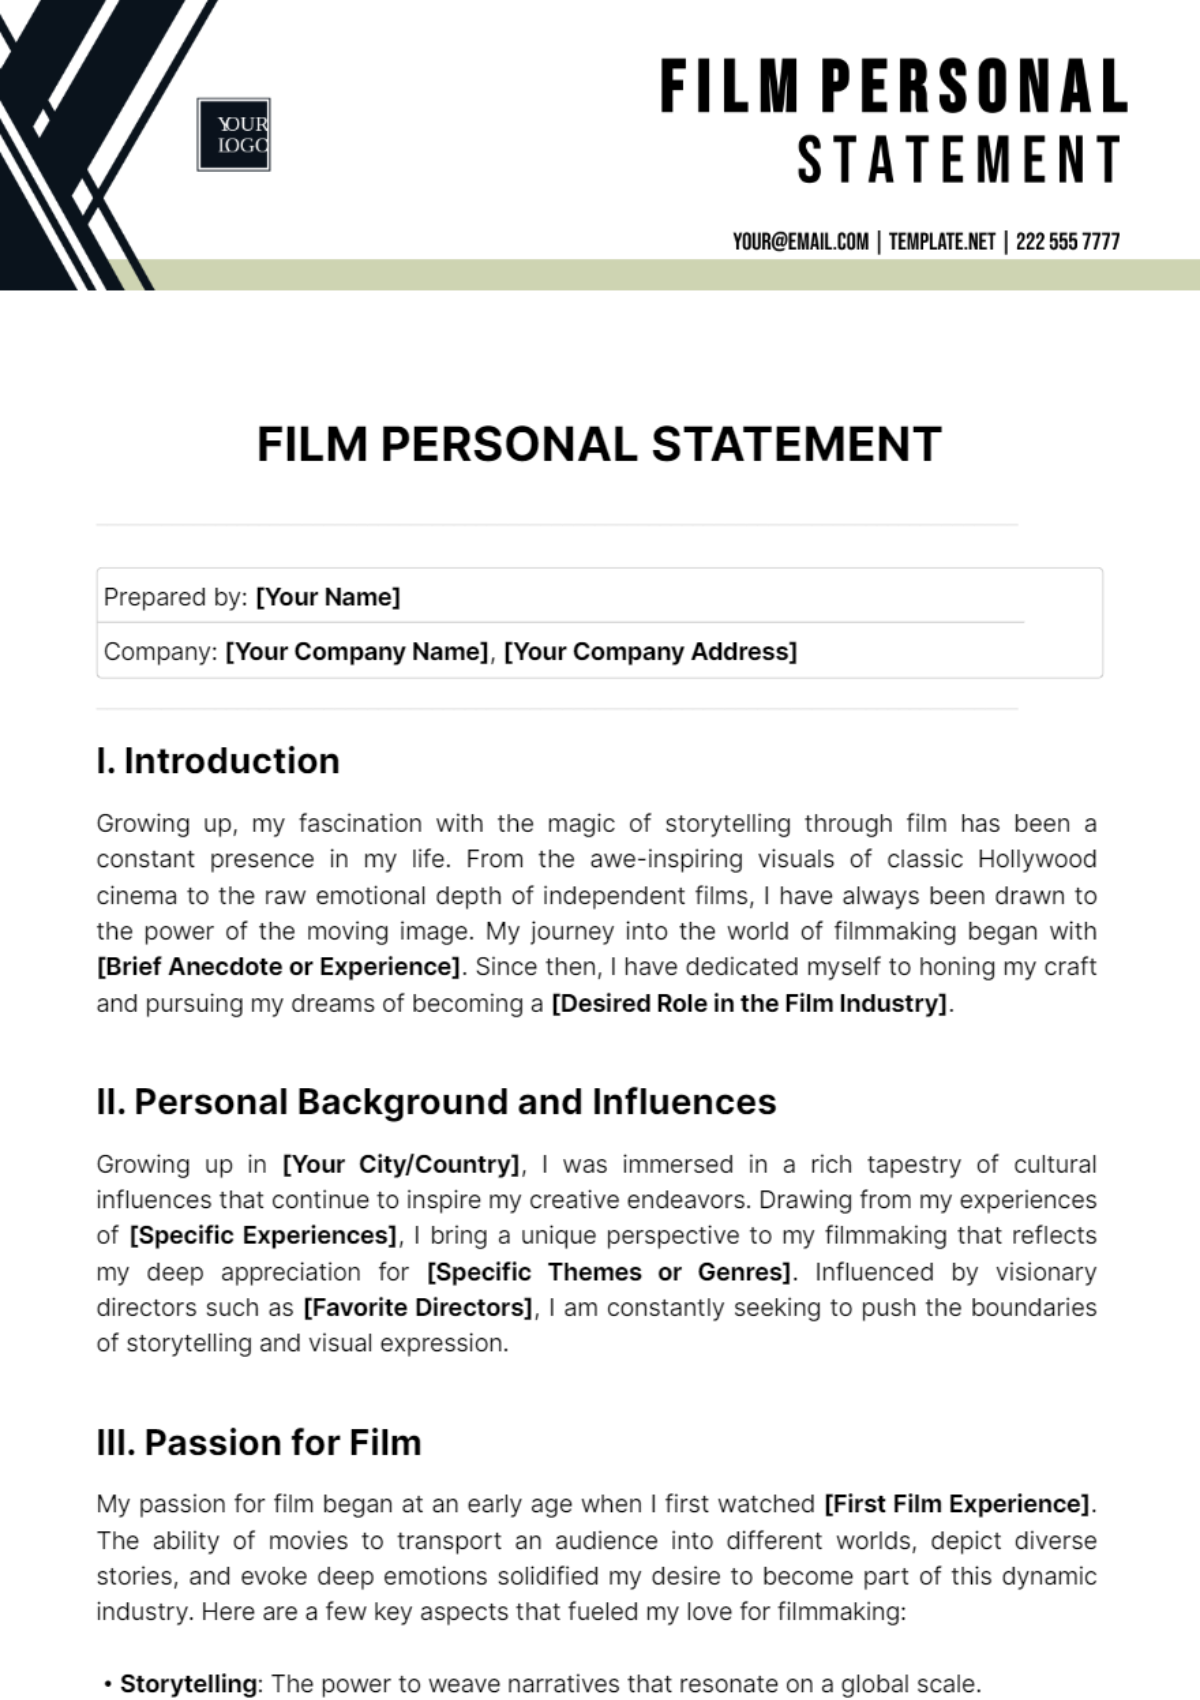 Film Personal Statement Template